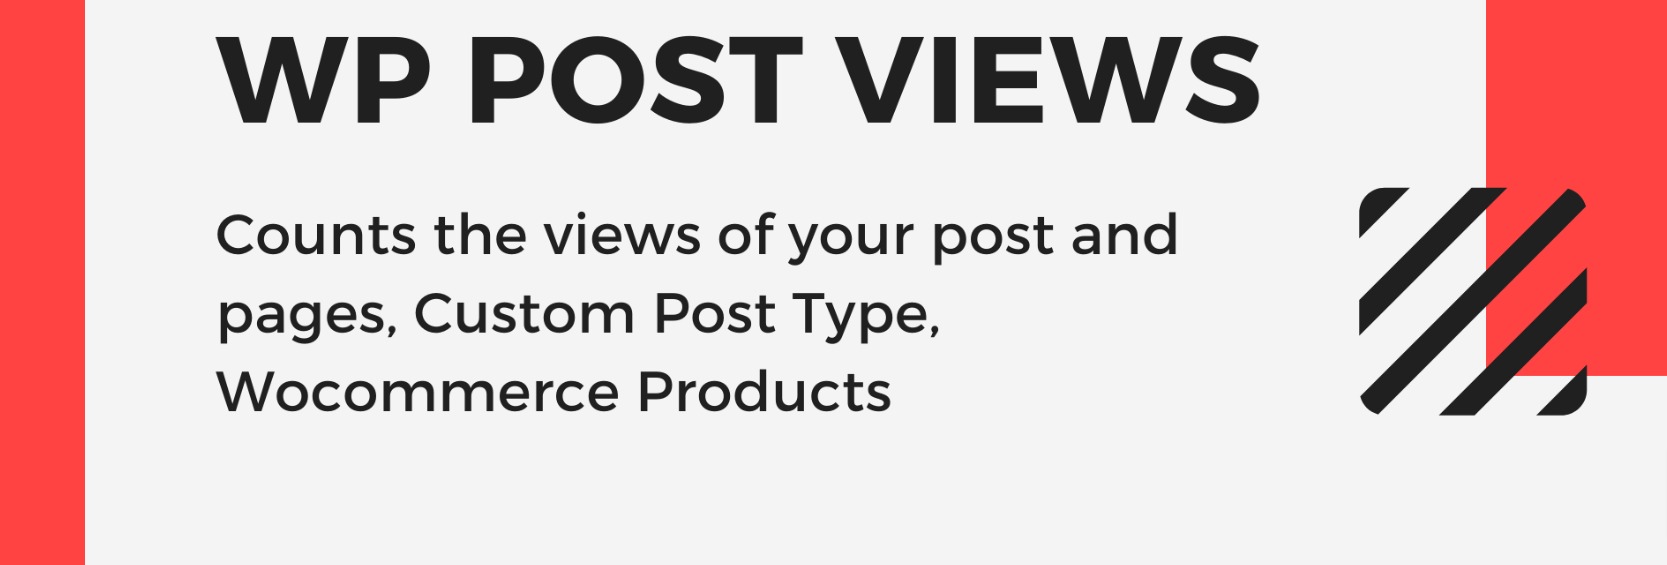 Wordpress Post View Counter Plugin 2